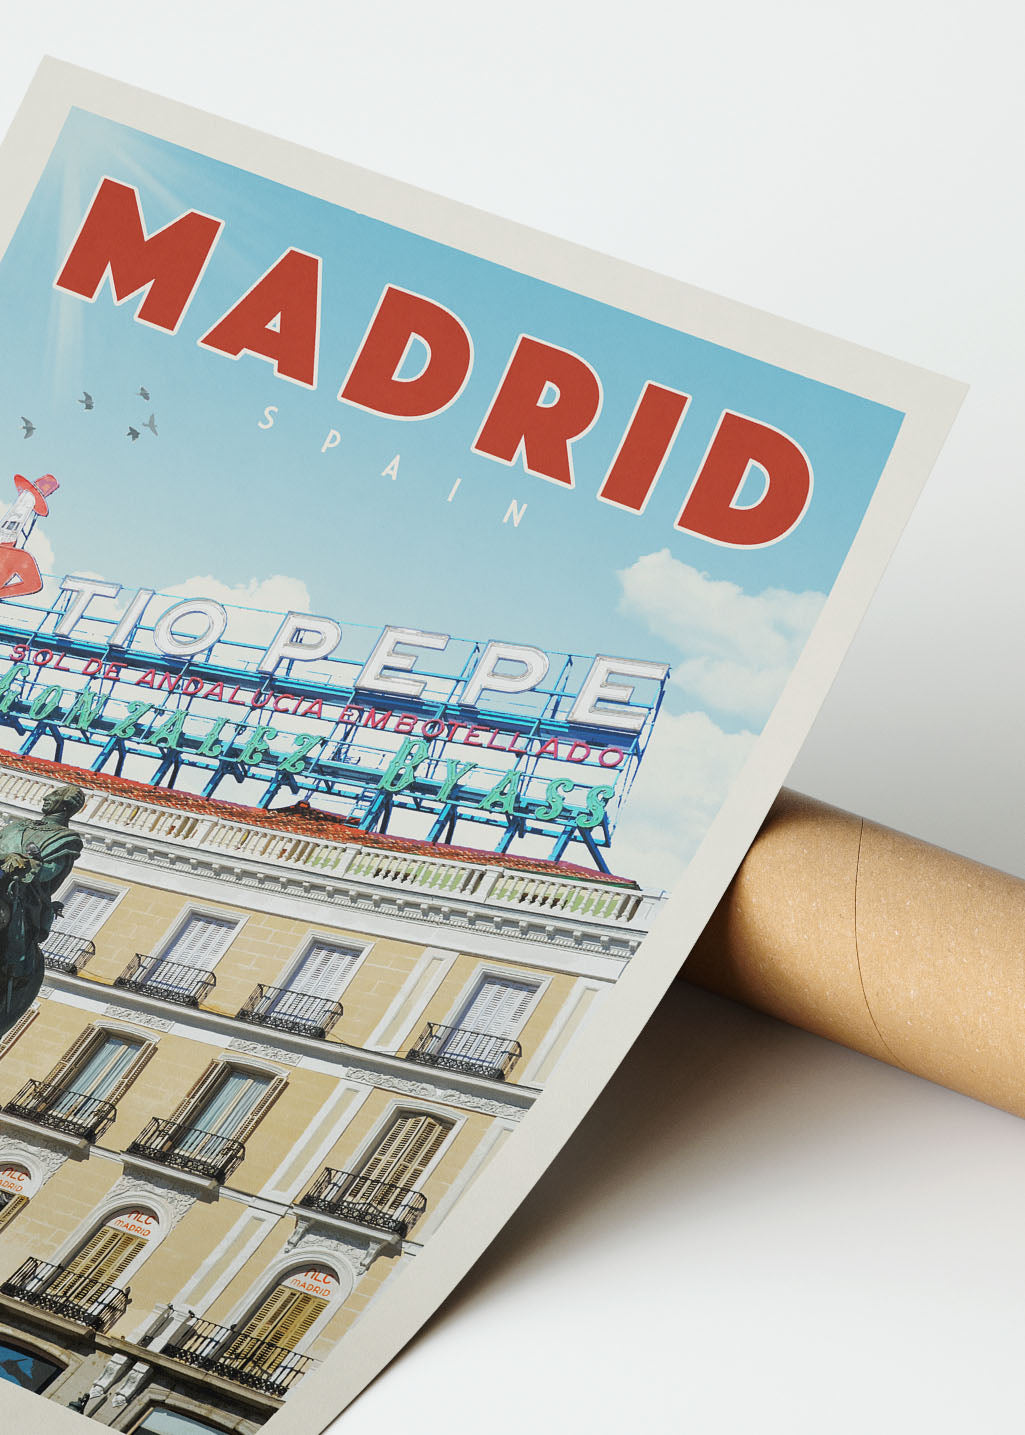 Tio Pepe Madrid, Spain - Vintage Travel Poster